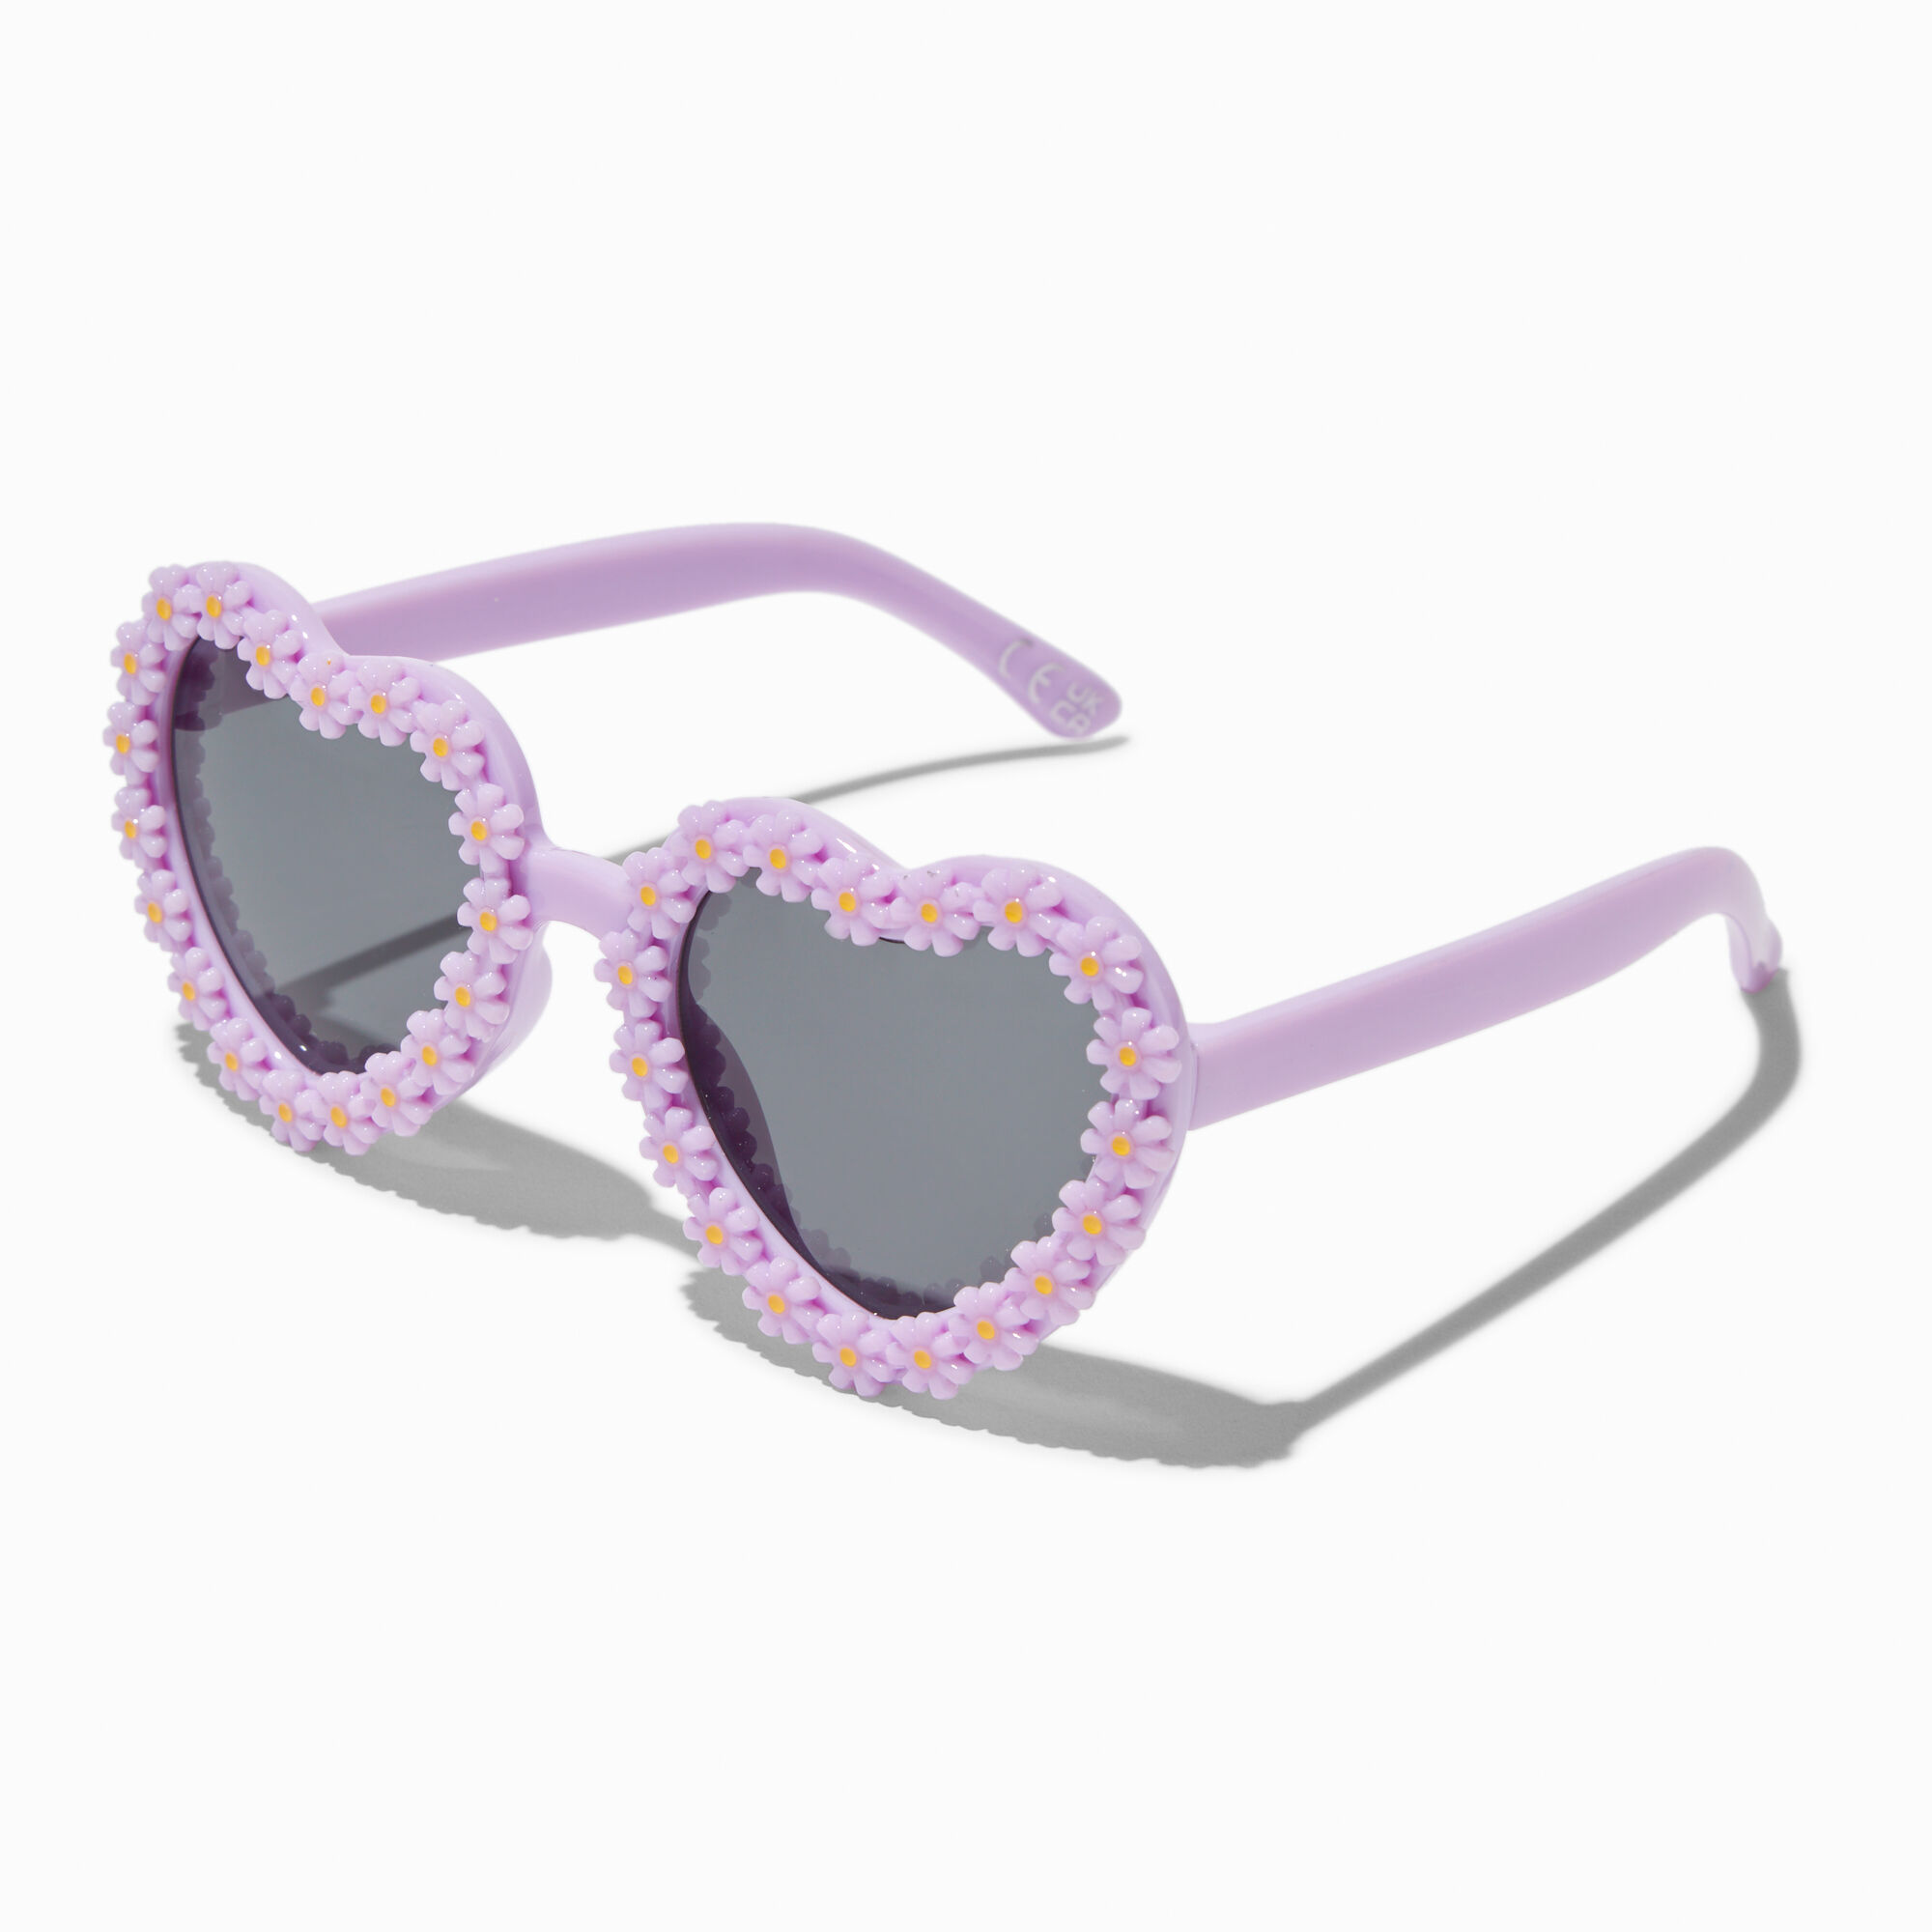 View Claires Club Floral Heart Sunglasses Purple information